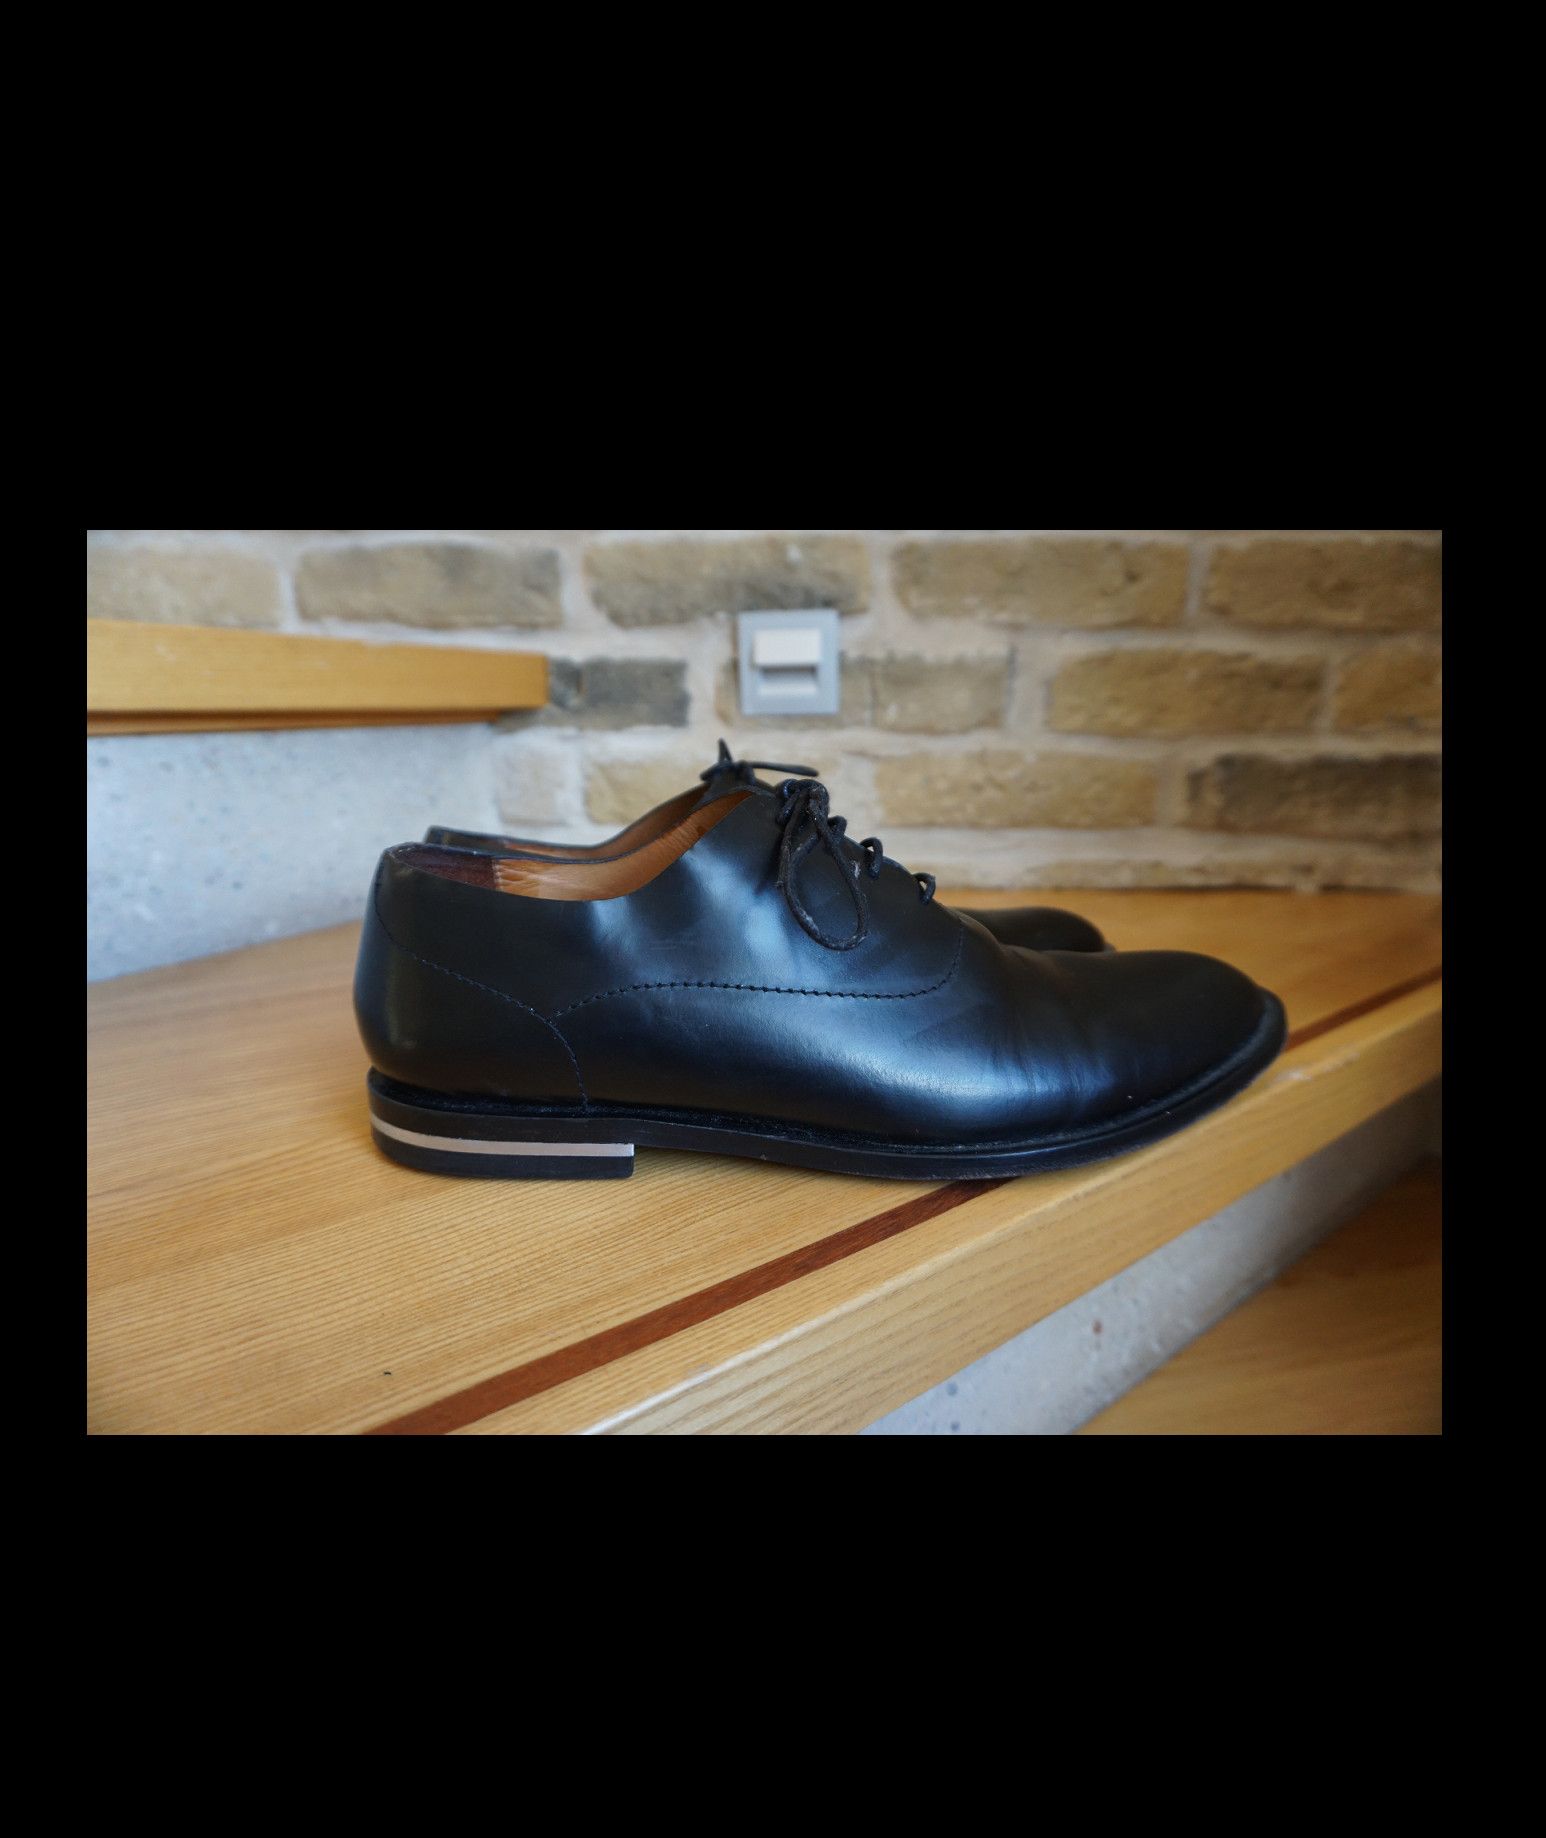 Cos COS RPR$250 leather office shoes EU44 black formal lace up Size US 10.5 / EU 43-44 - 1 Preview